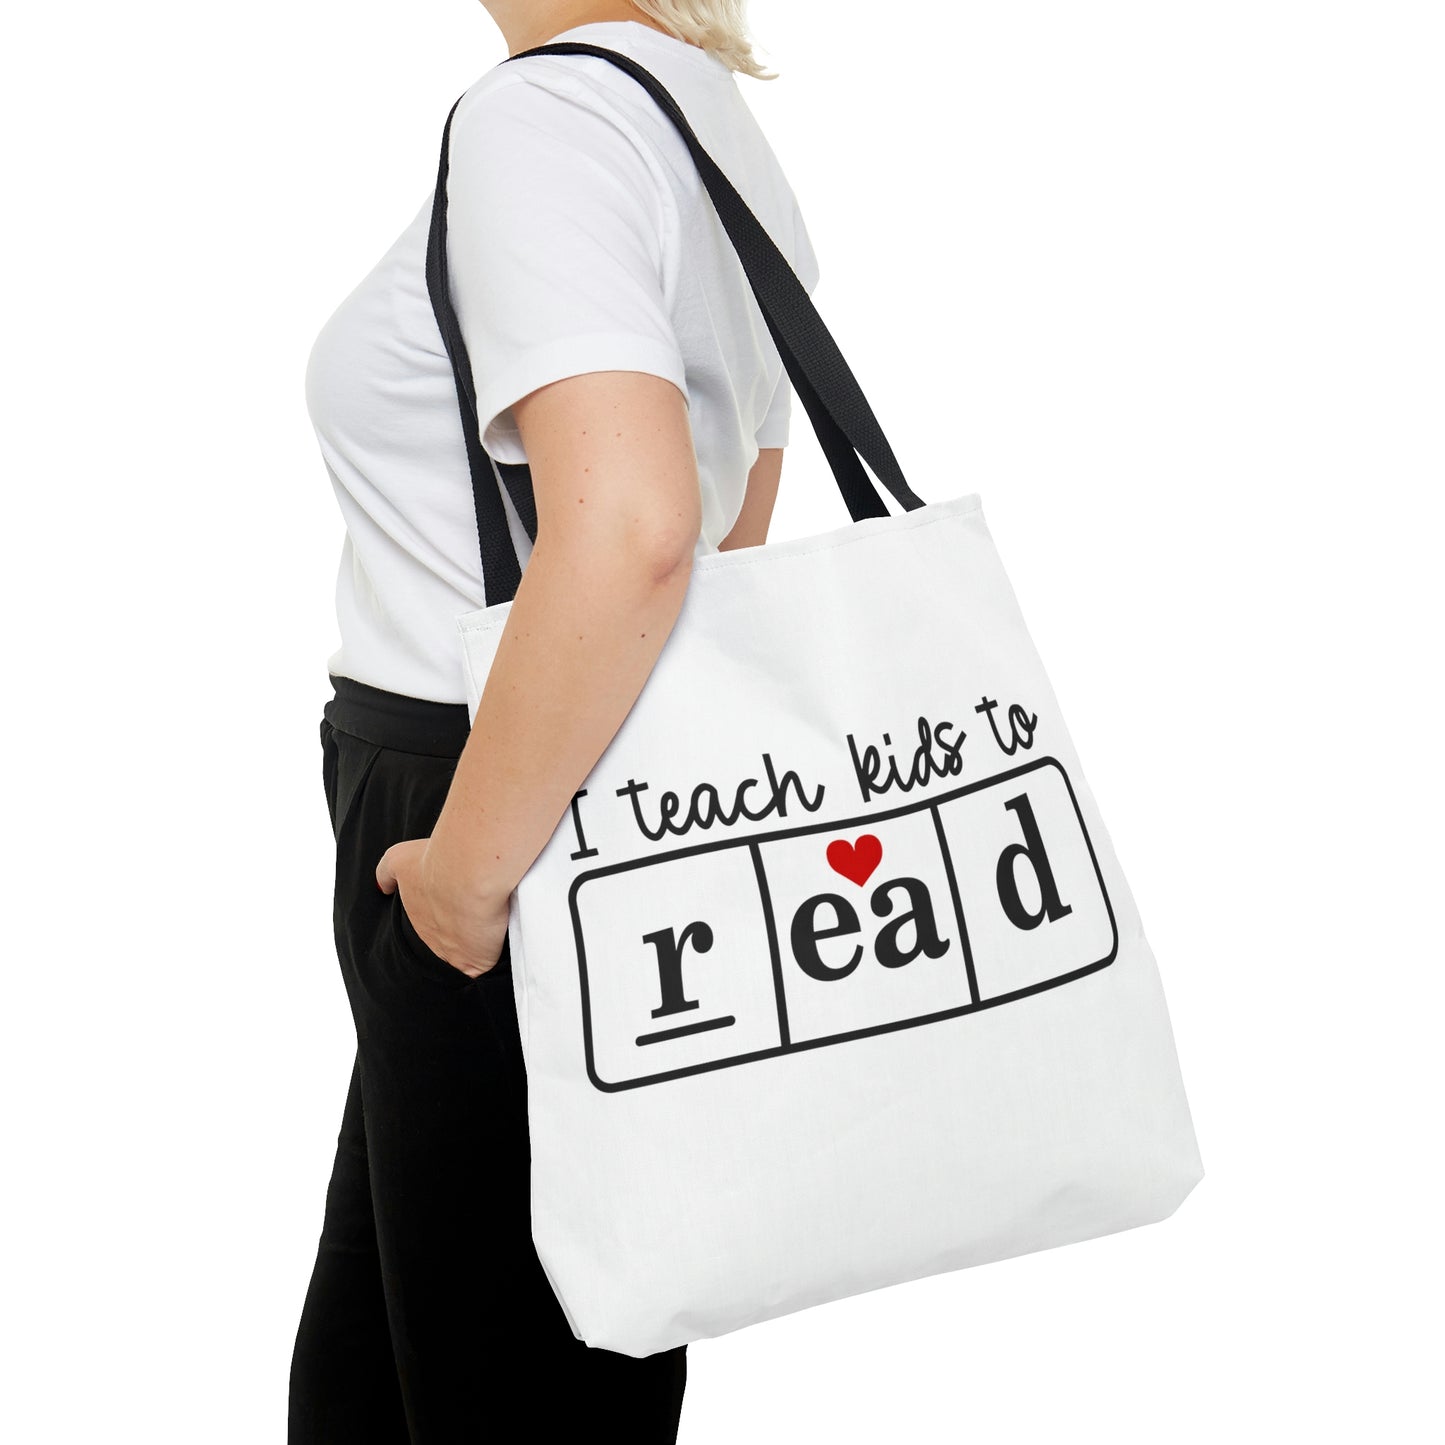 "I teach kids to read" & "Educational Rockstar" Tote Bag